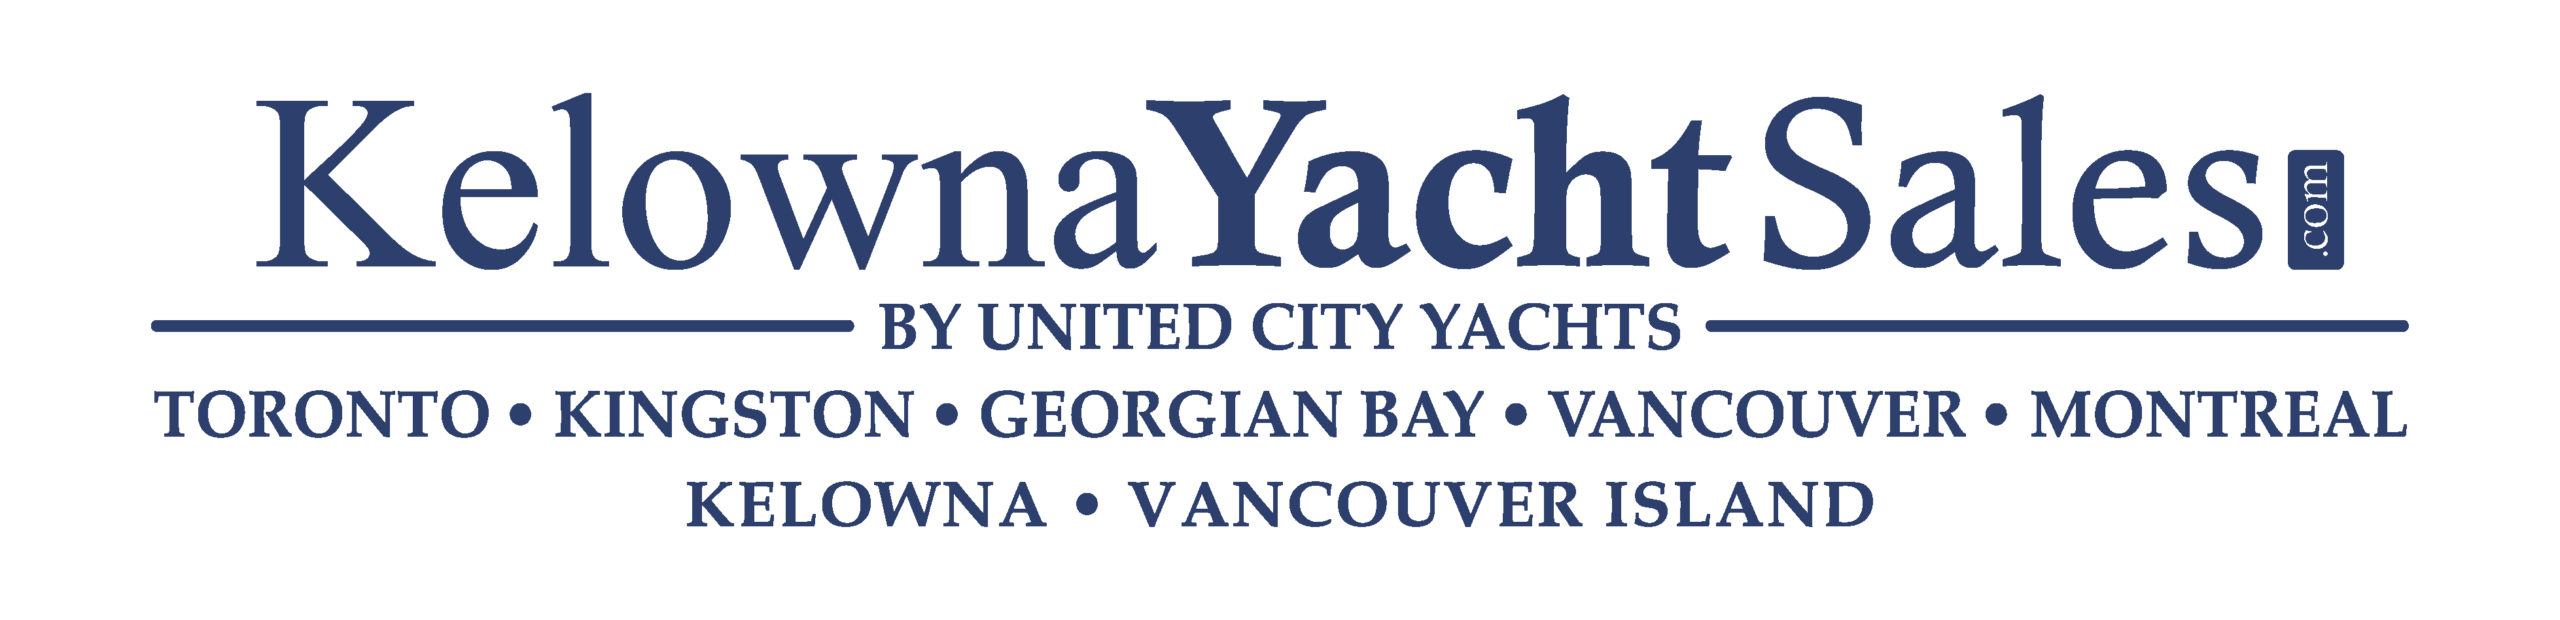 Kelowna Yacht Sales – United City Yachts